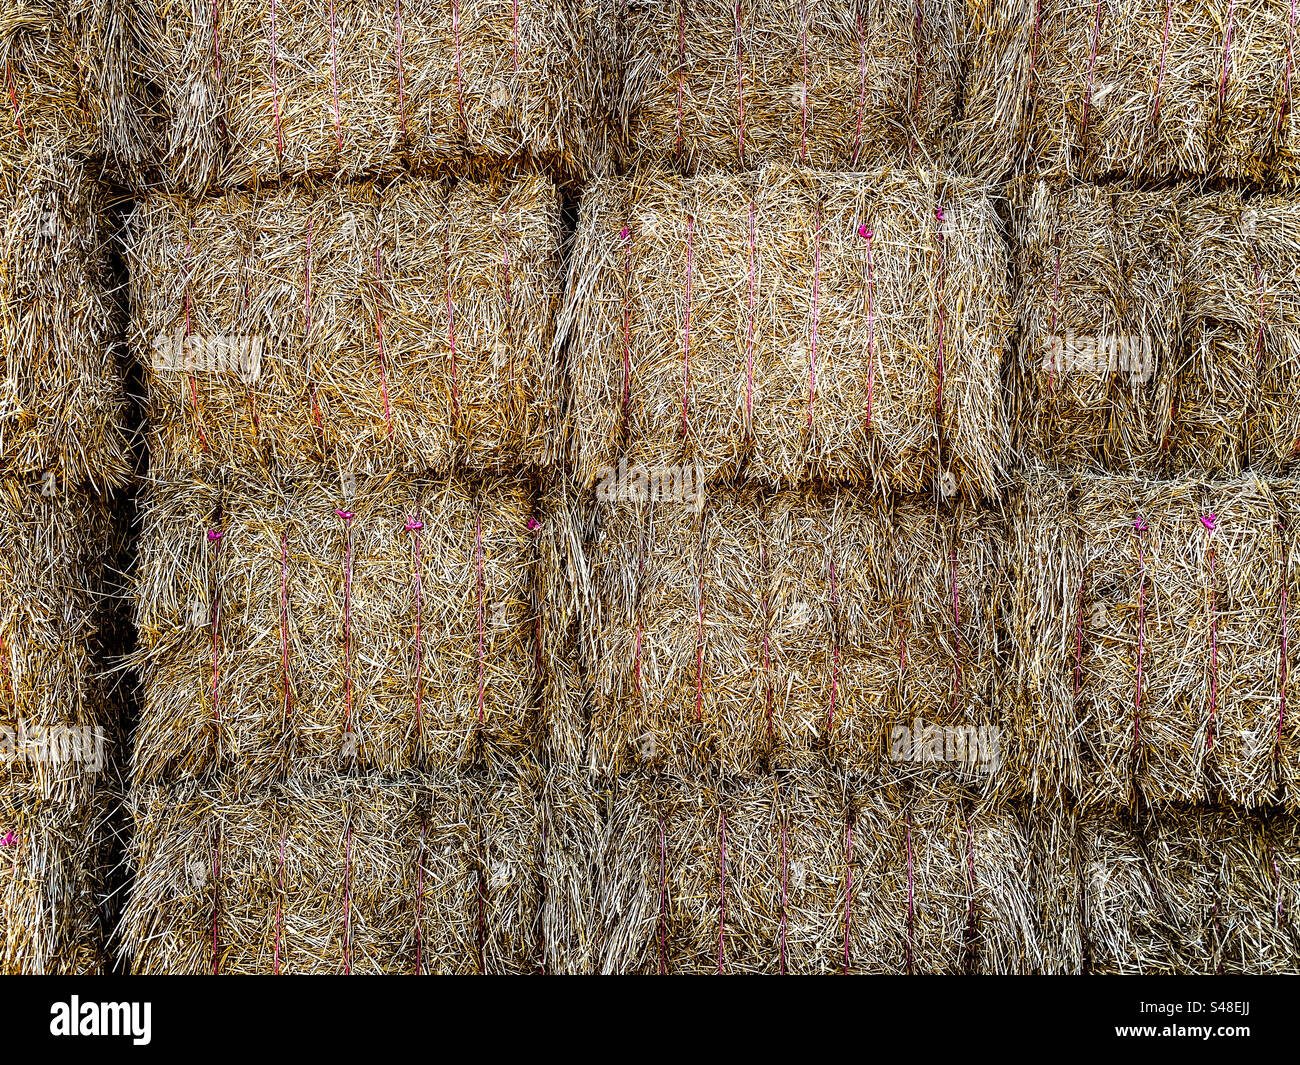 Closeup of bales of hay Stock Photo